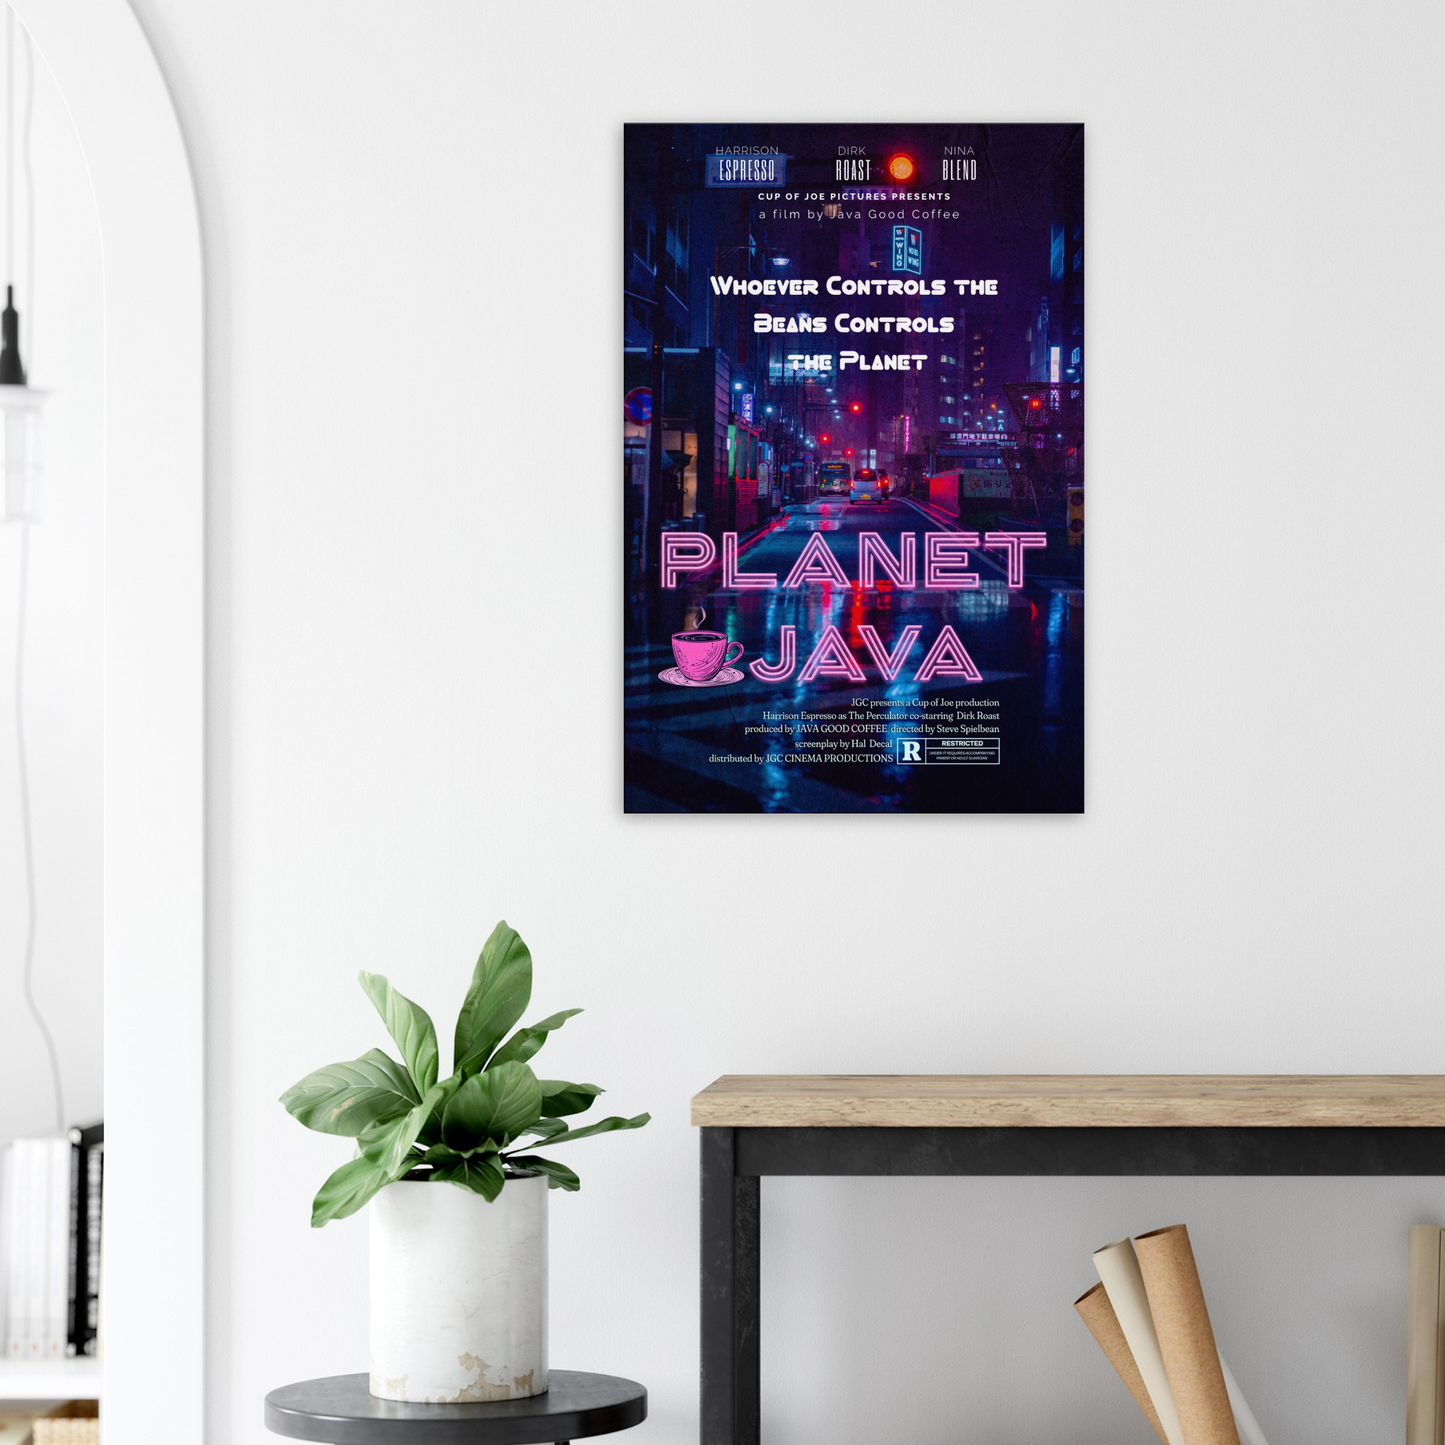 Planet Java Movie Canvas Wall Print at Java Good Coffee